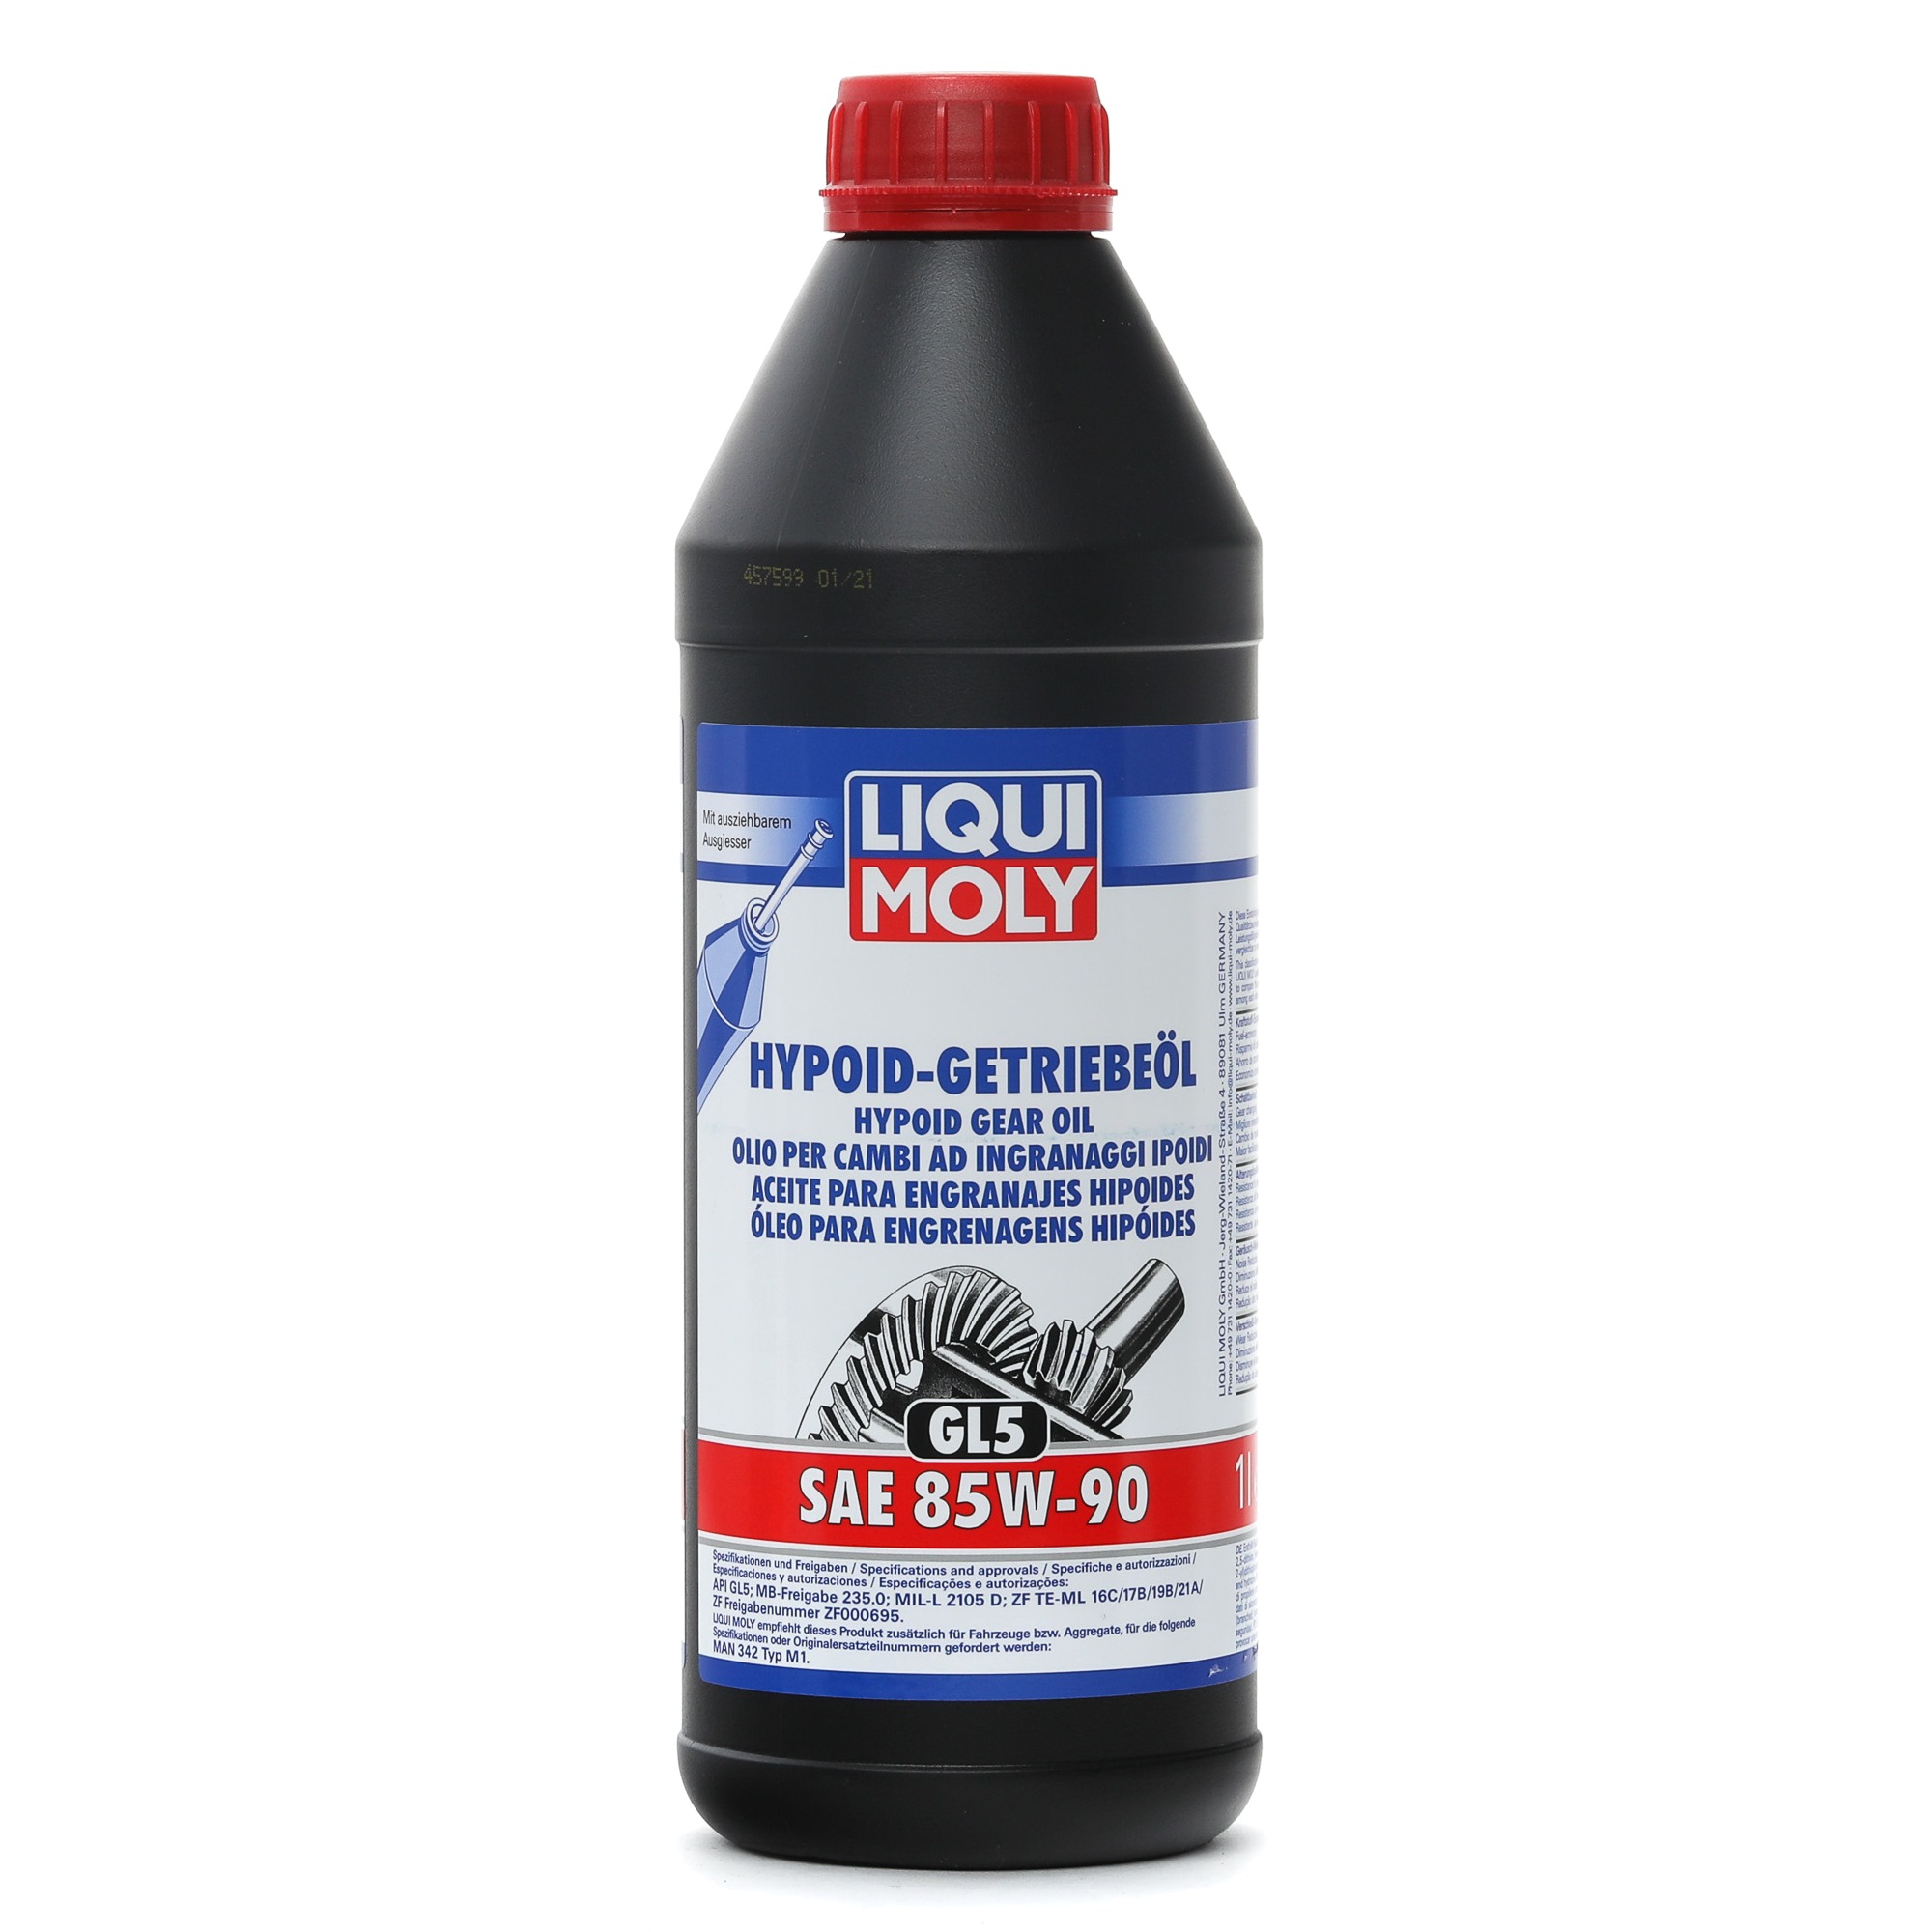 Original BMW Mofa Öle & Flüssigkeiten Ersatzteile: Getriebeöl LIQUI MOLY Hypoid GL5 1035